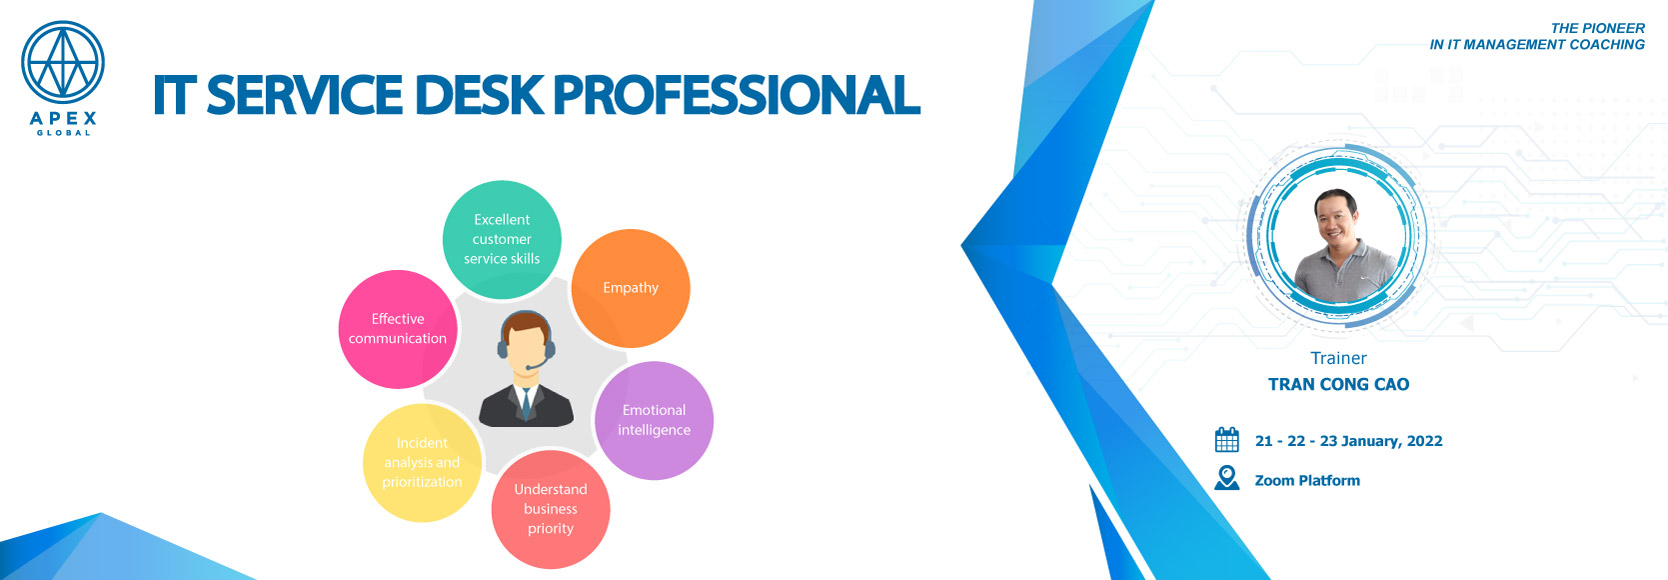 IT-service-desk-professional-apex-global